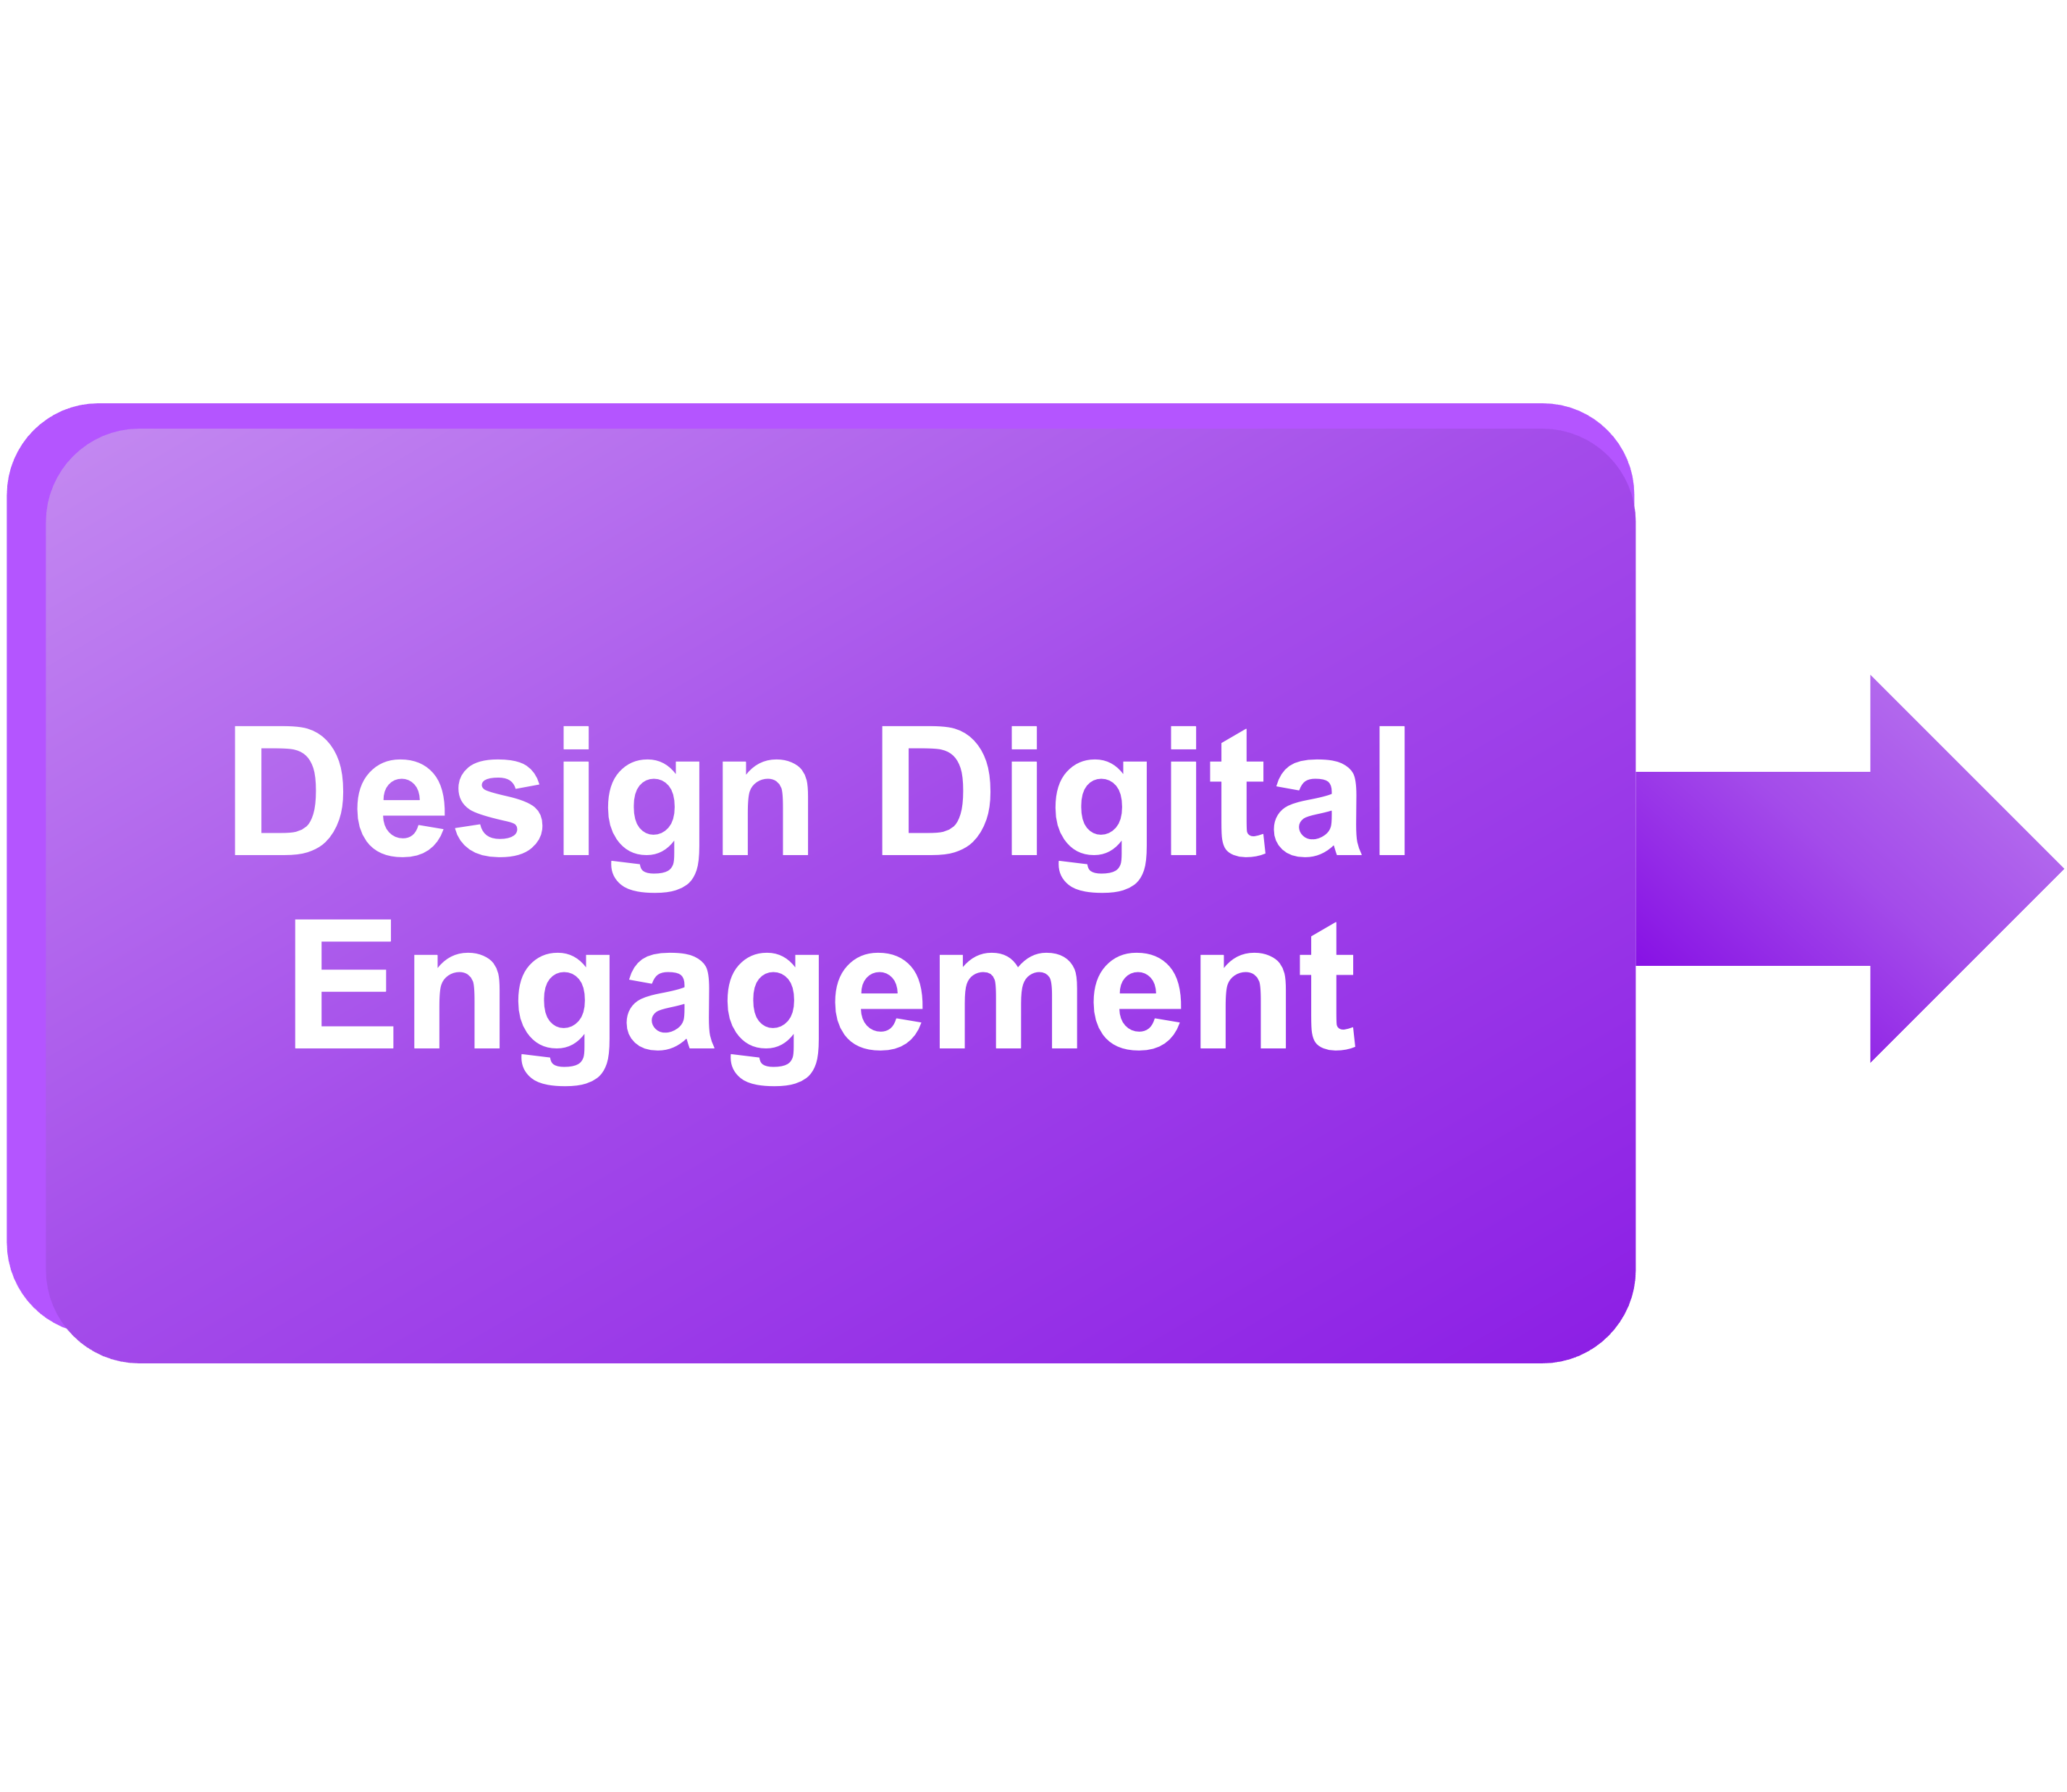 Design Digital Engagement